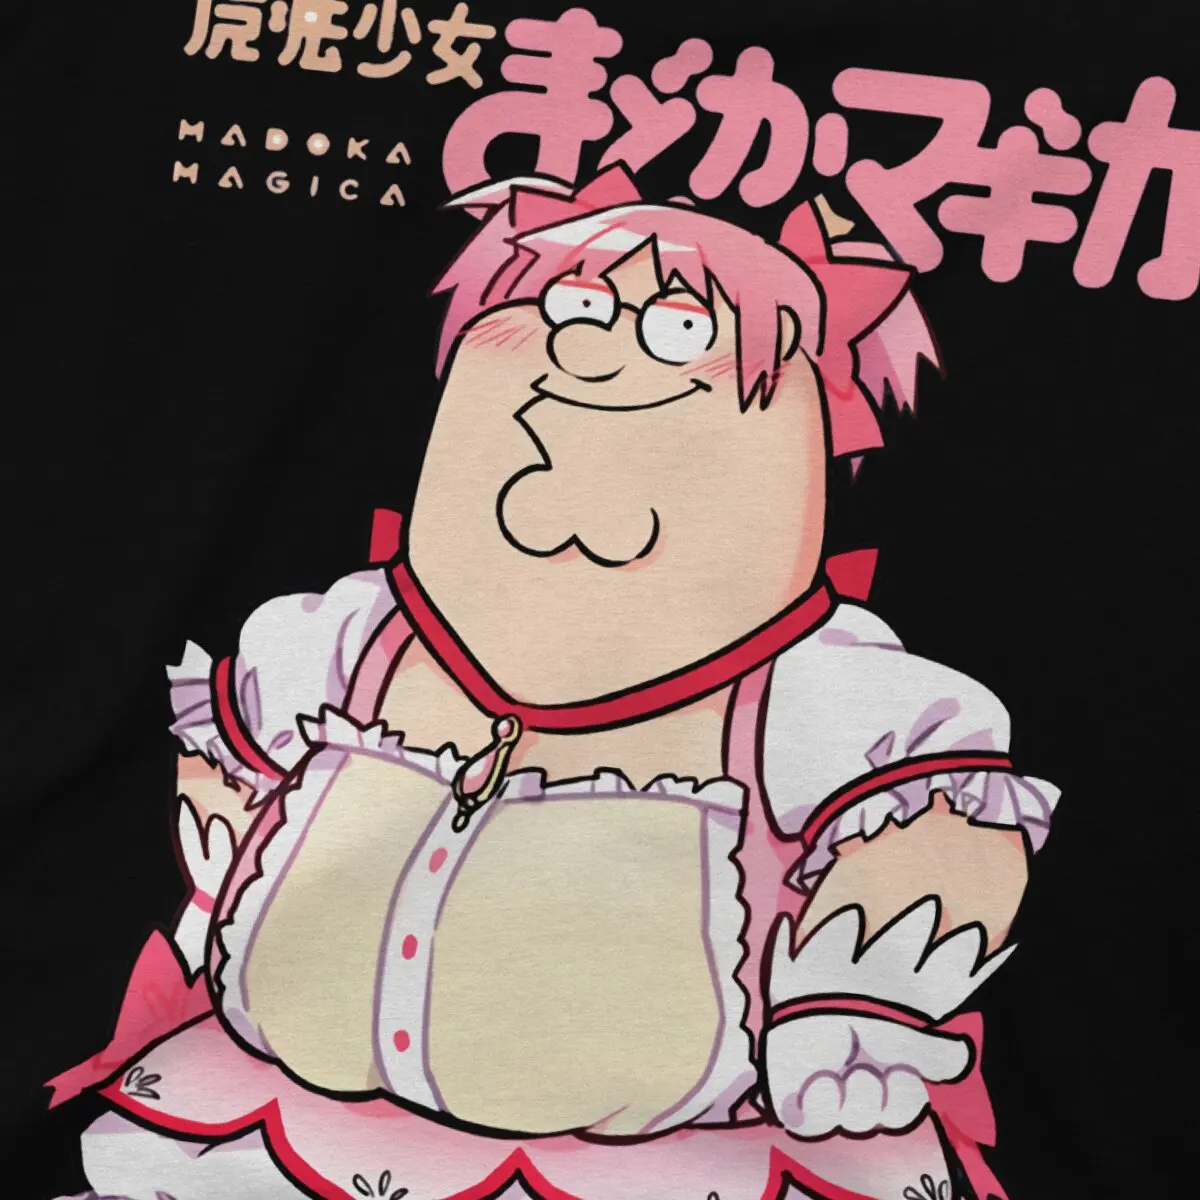 Funny Magical Girl Classic Men TShirt Puella Magi Madoka Magica Anime Tops 100% Cotton T Shirt Humor High Quality Birthday Gifts